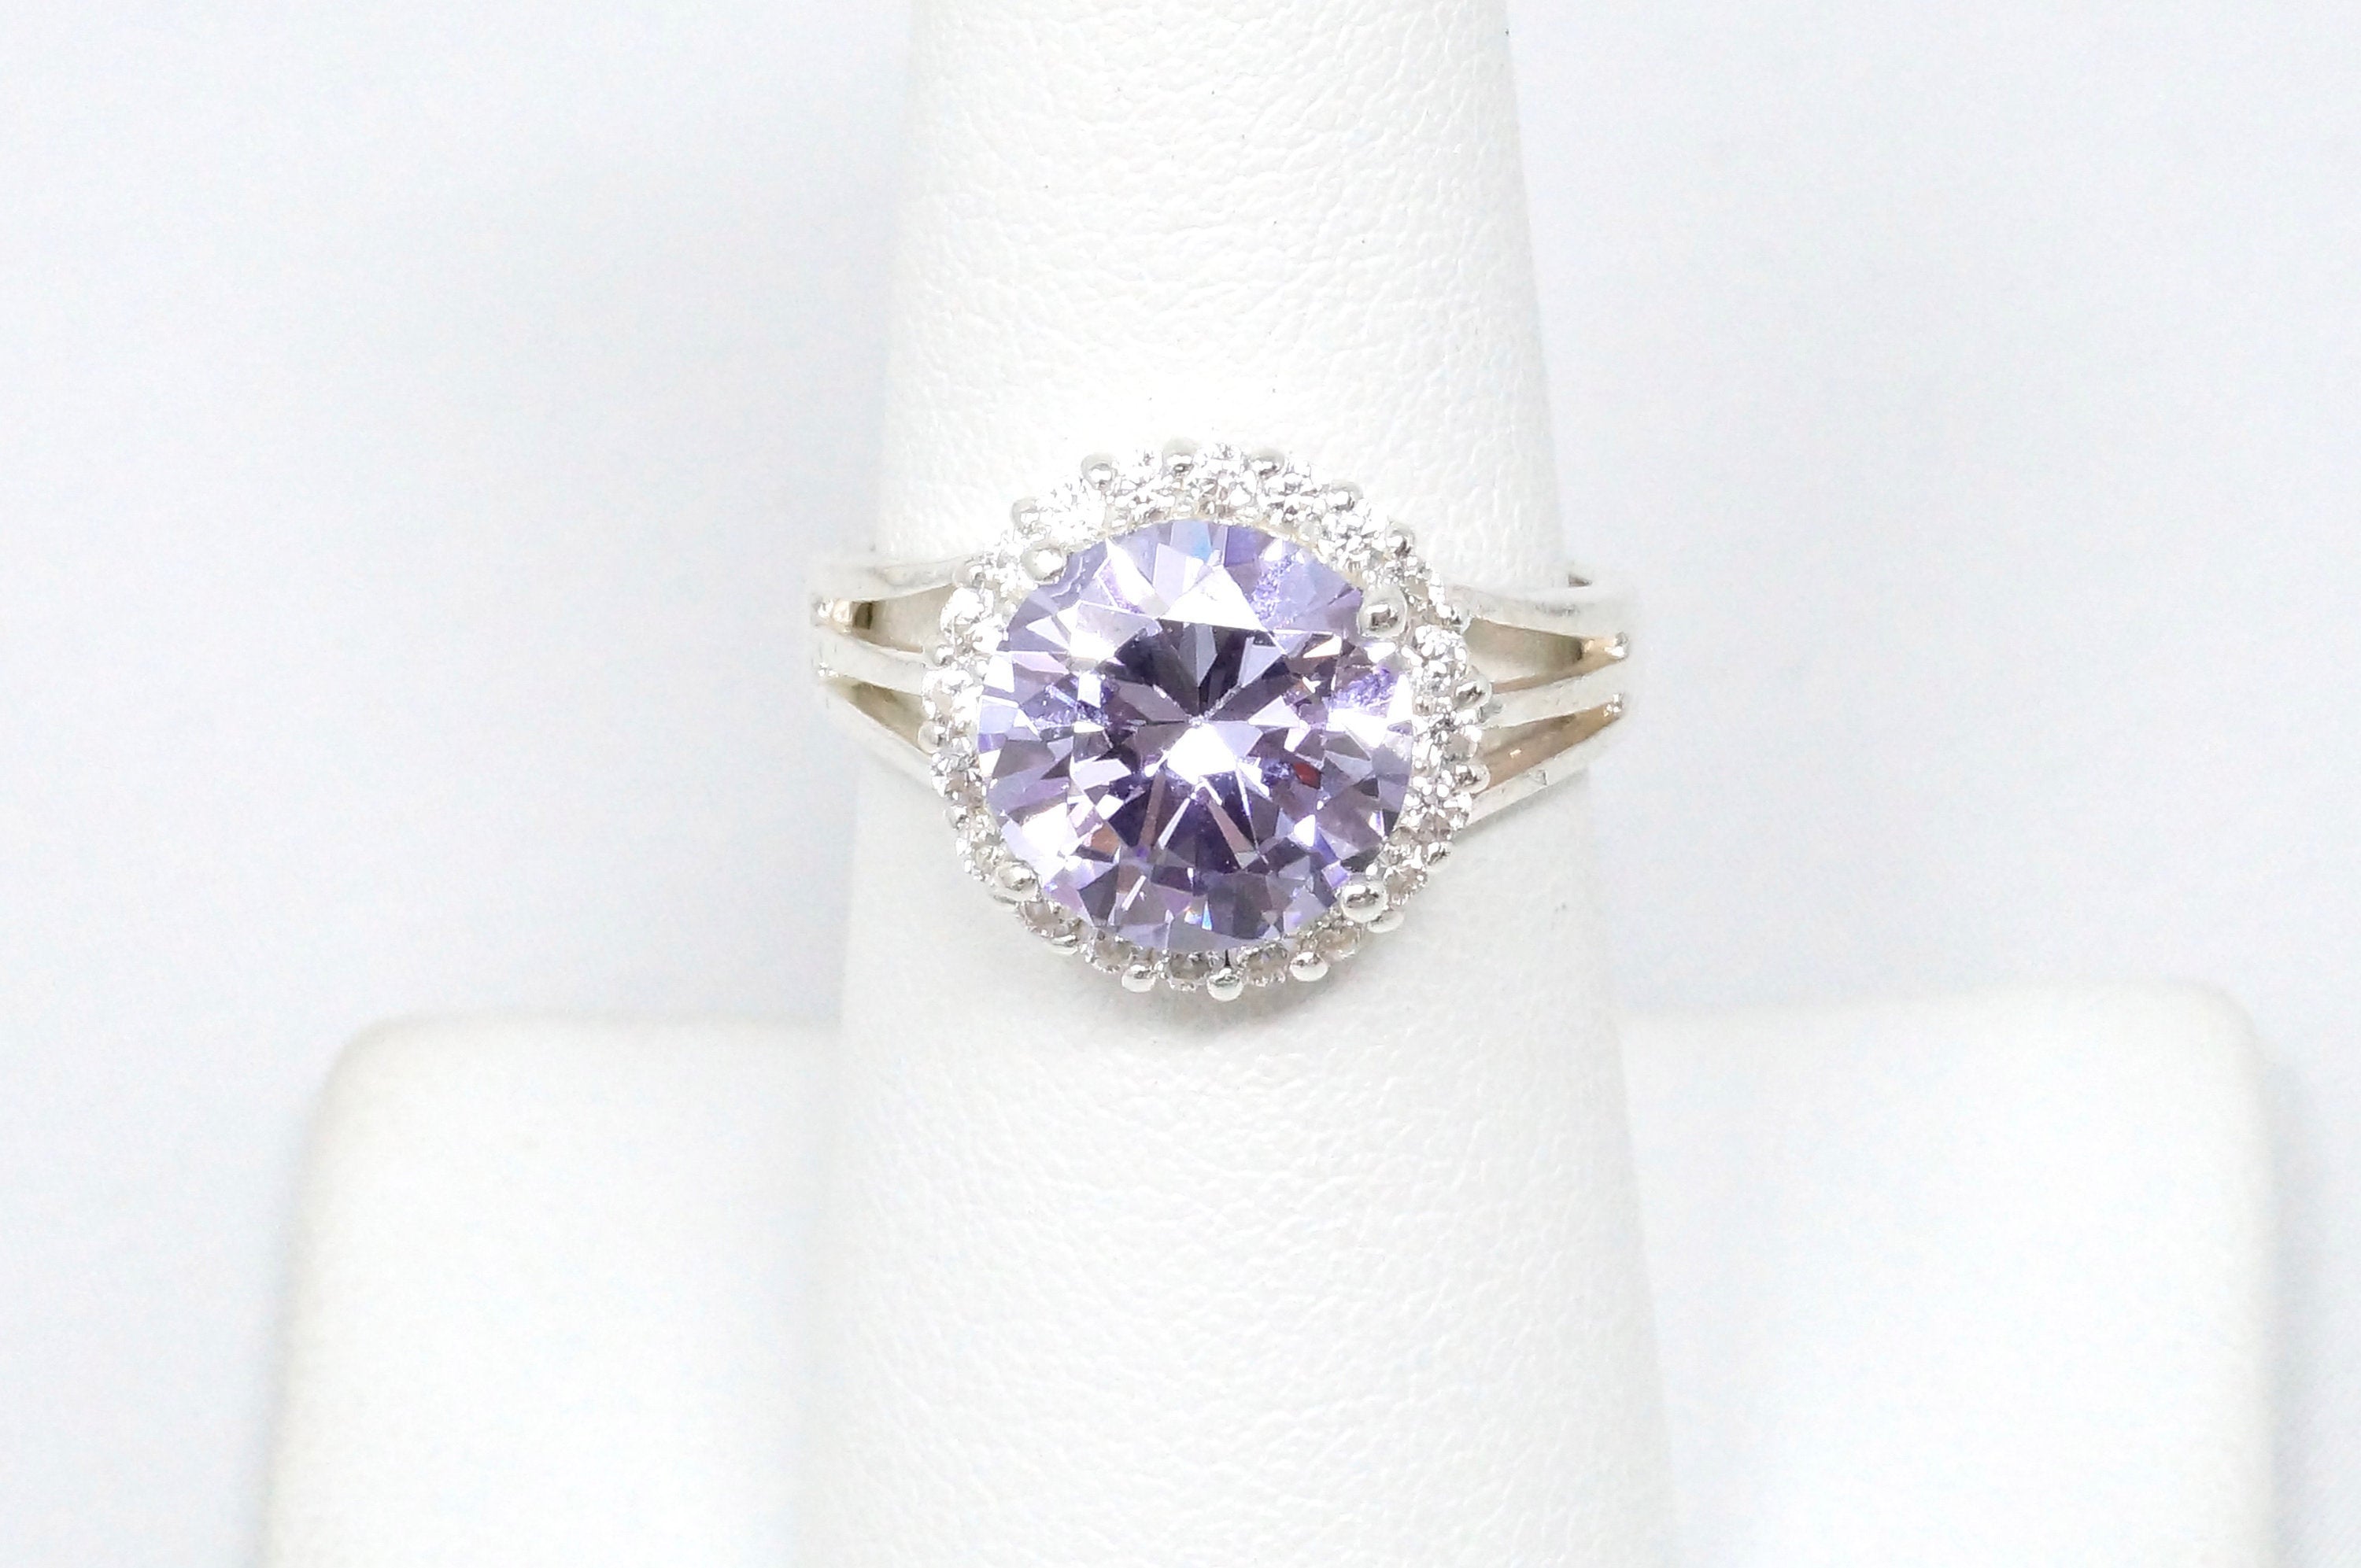 Vtg Art Deco Style Large Purple CZ Sterling Silver Statement Ring Sz 7